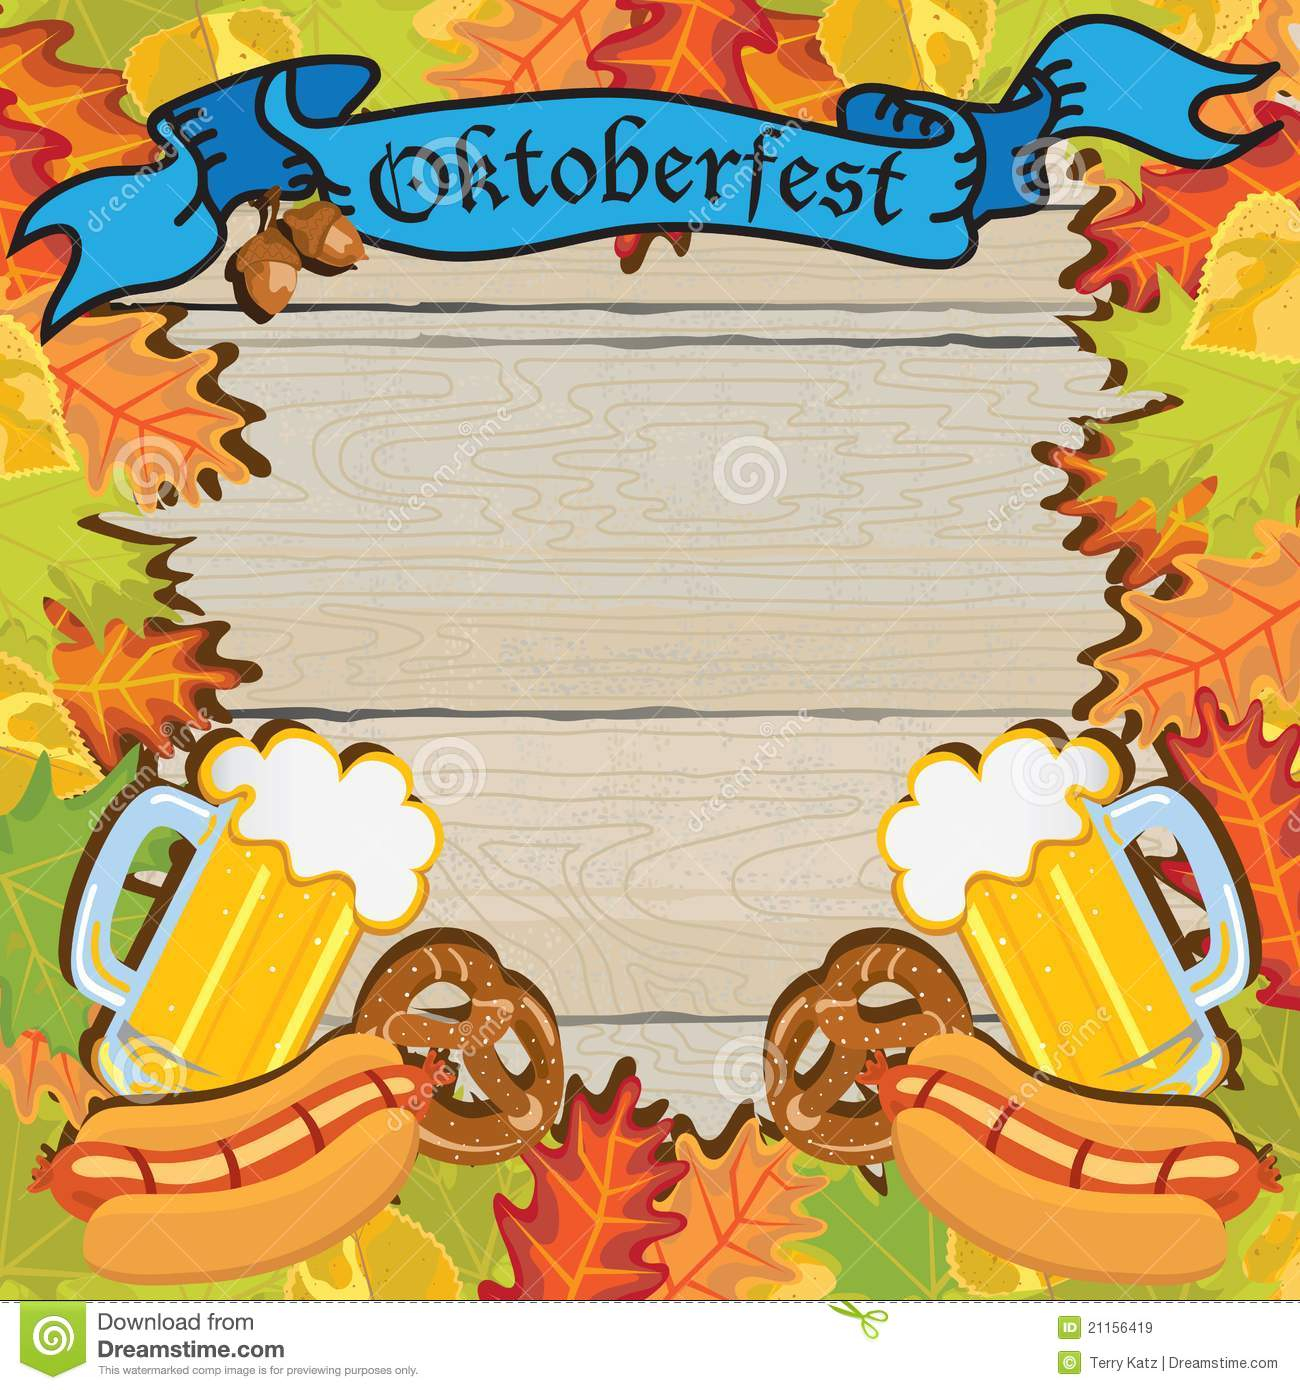 Oktoberfest Party Frame Invitation Poster Editorial Stock Image inside sizing 1300 X 1390